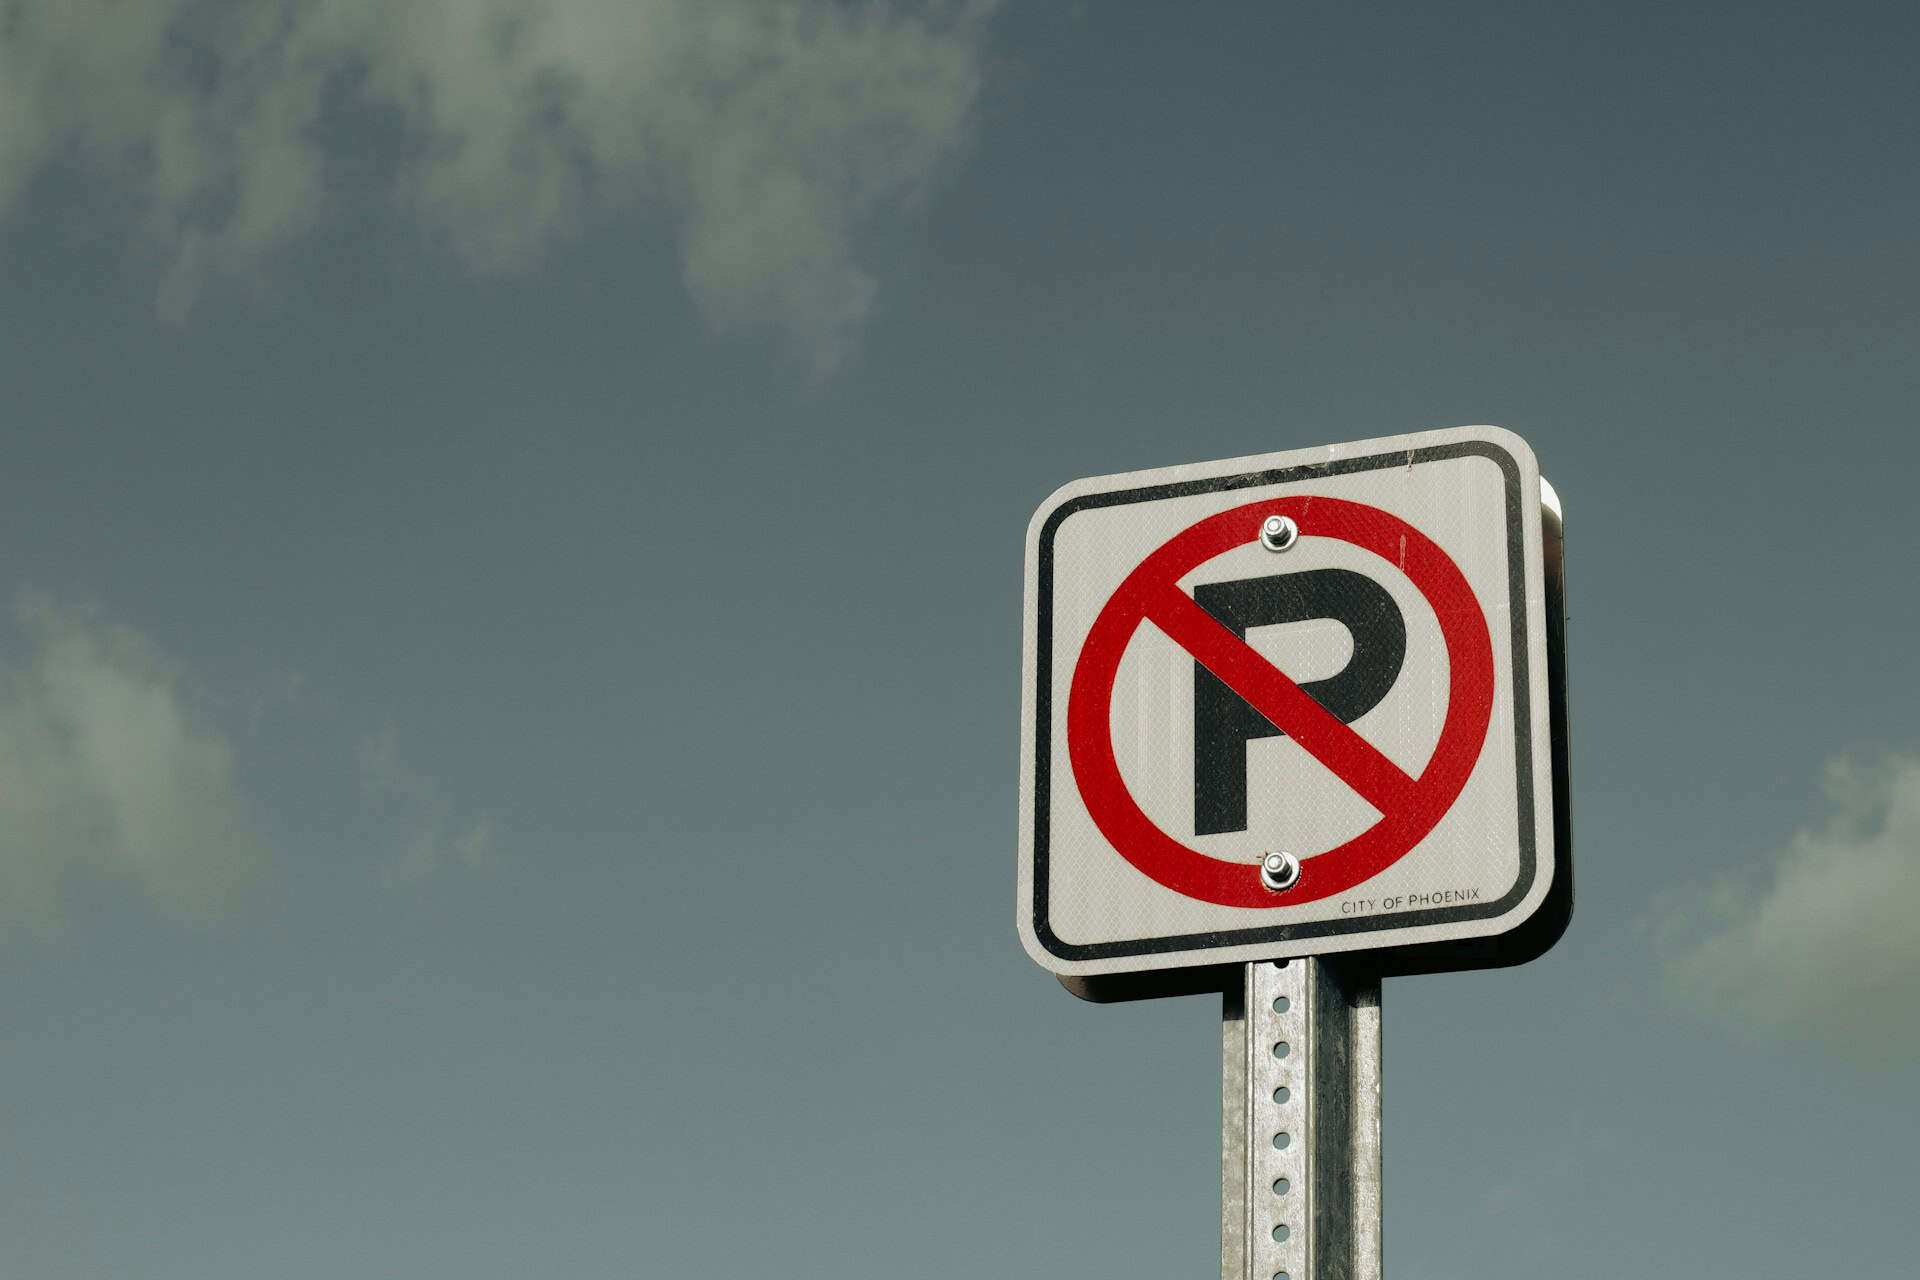 No Parking Road Sign